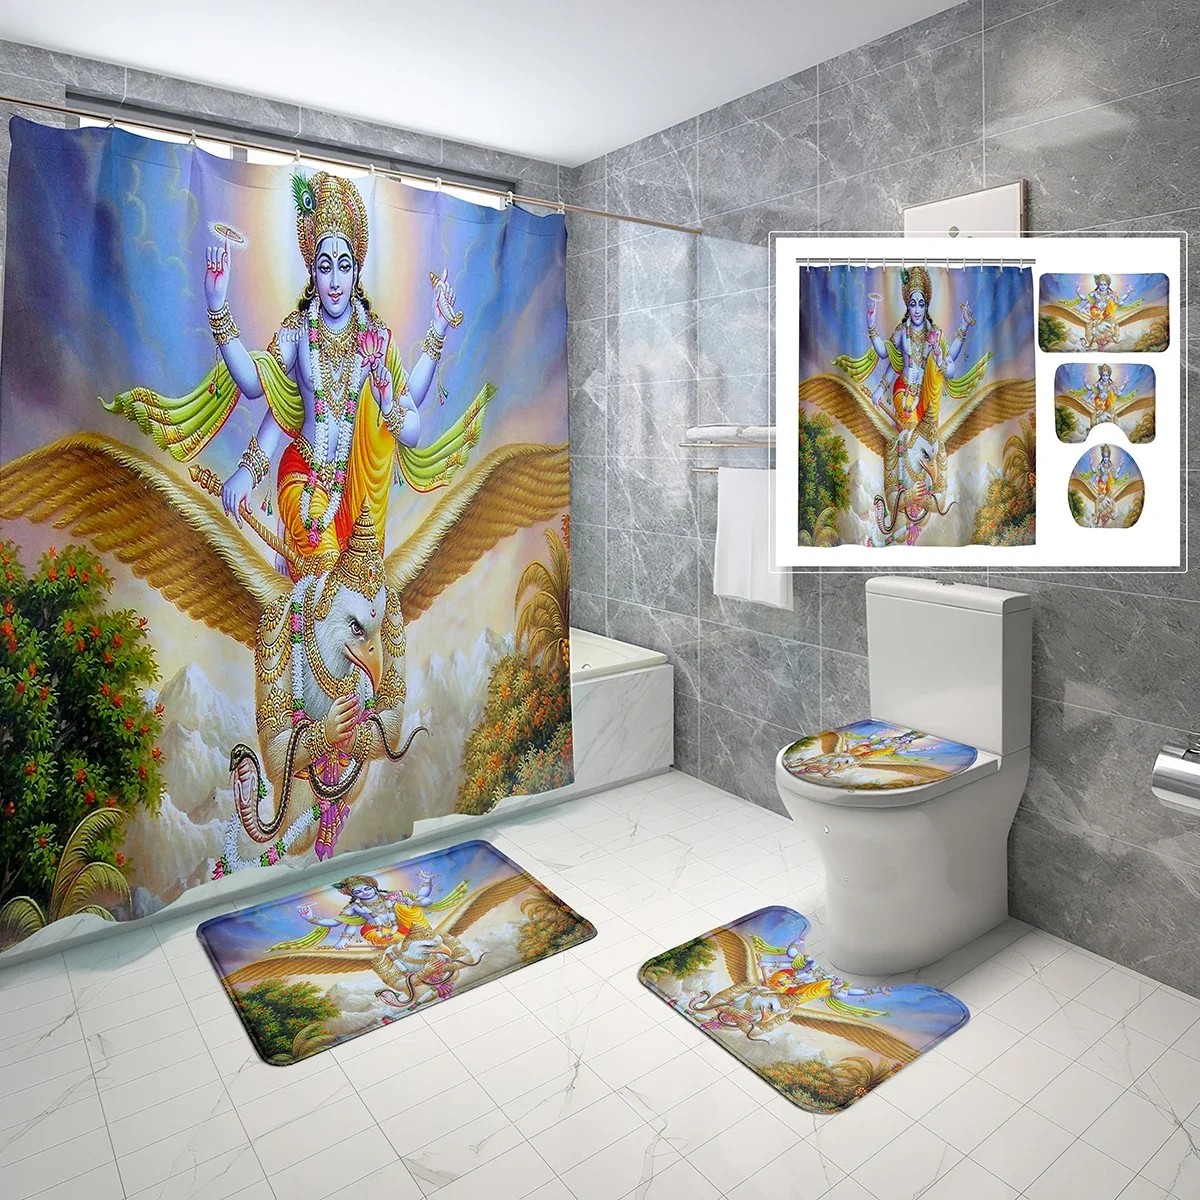 

4PCS Indian Religious Shower Curtain Set Indian Vishnu Lord Decorative Bath Curtain Bathroom Non-Slip Bath Mat Toilet Lid Cover